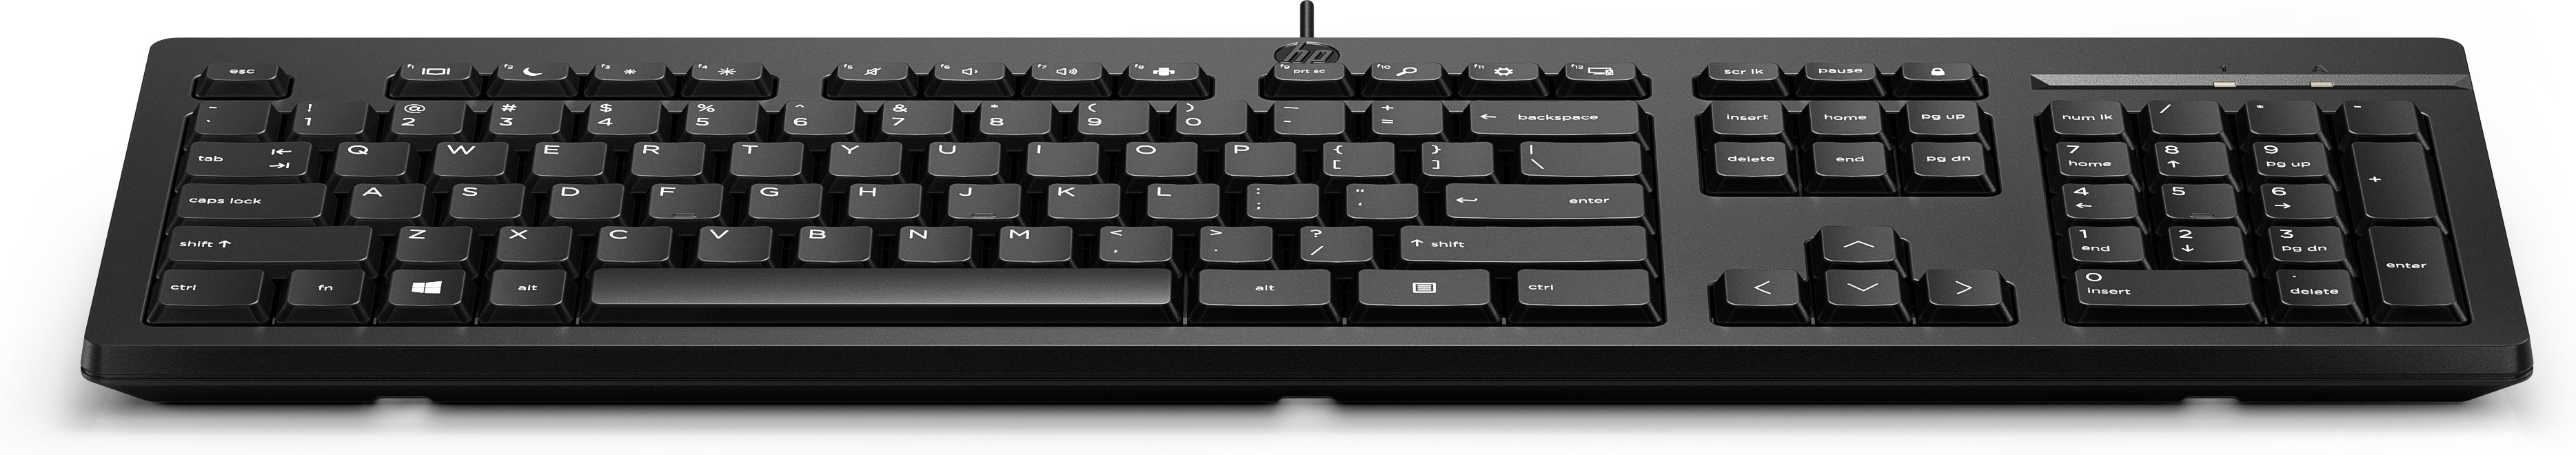  125 Wired Keyboard Belgium - English localization